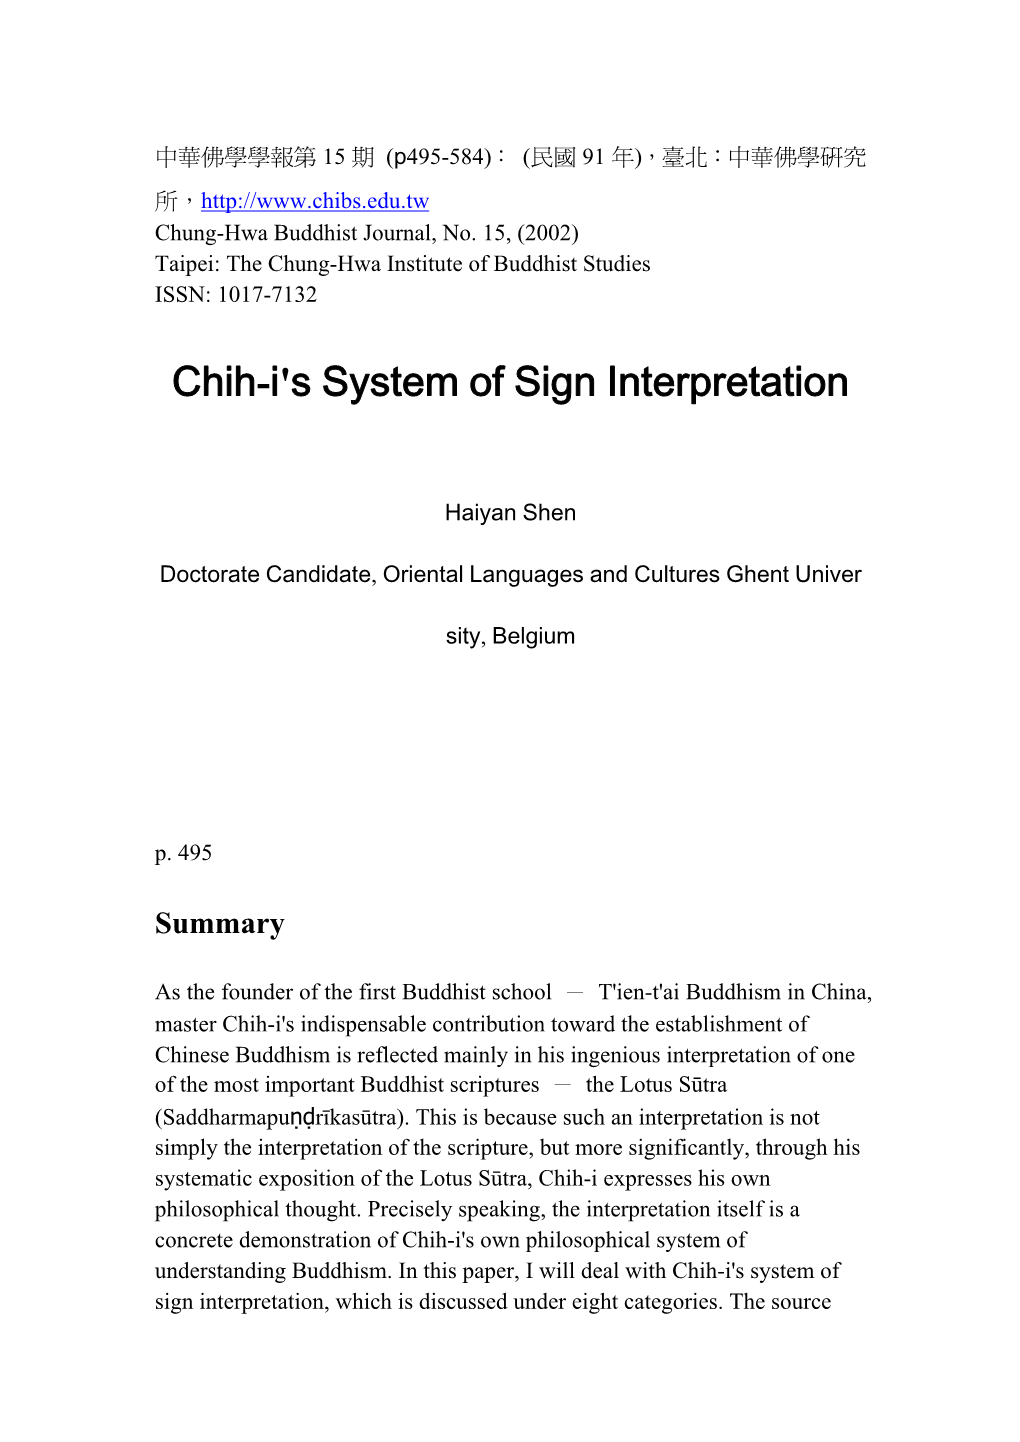 Chih-I's System of Sign Interpretation